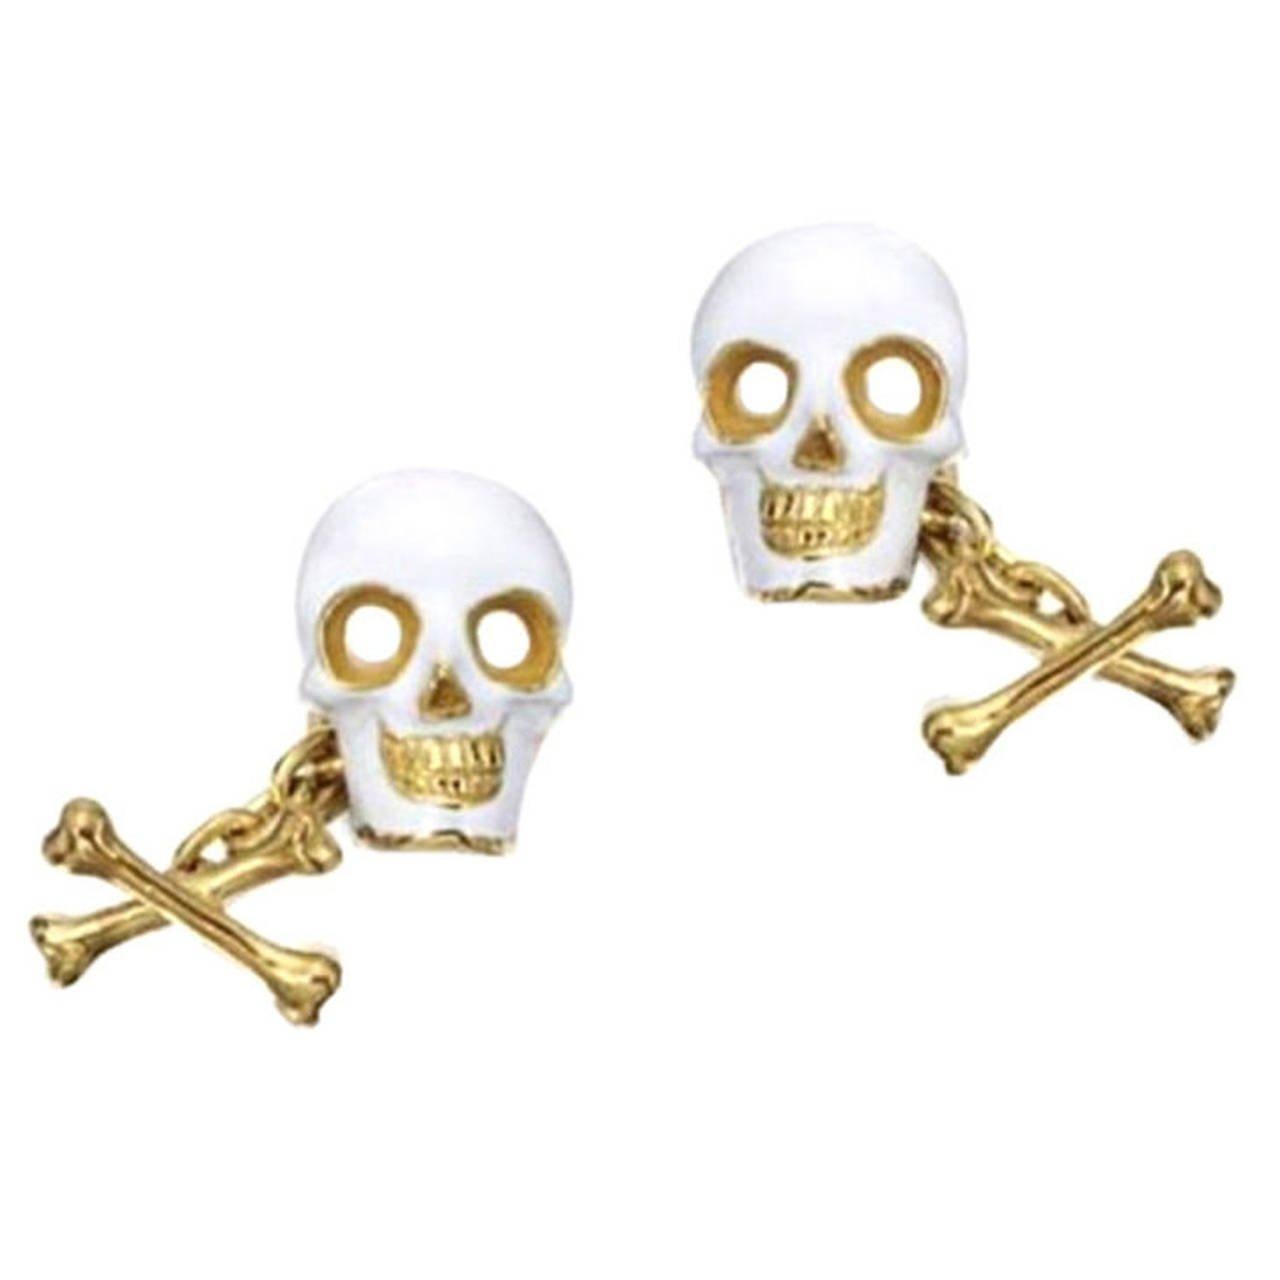 Contemporary White Enamel Gold Skull and Crossbones Cufflinks